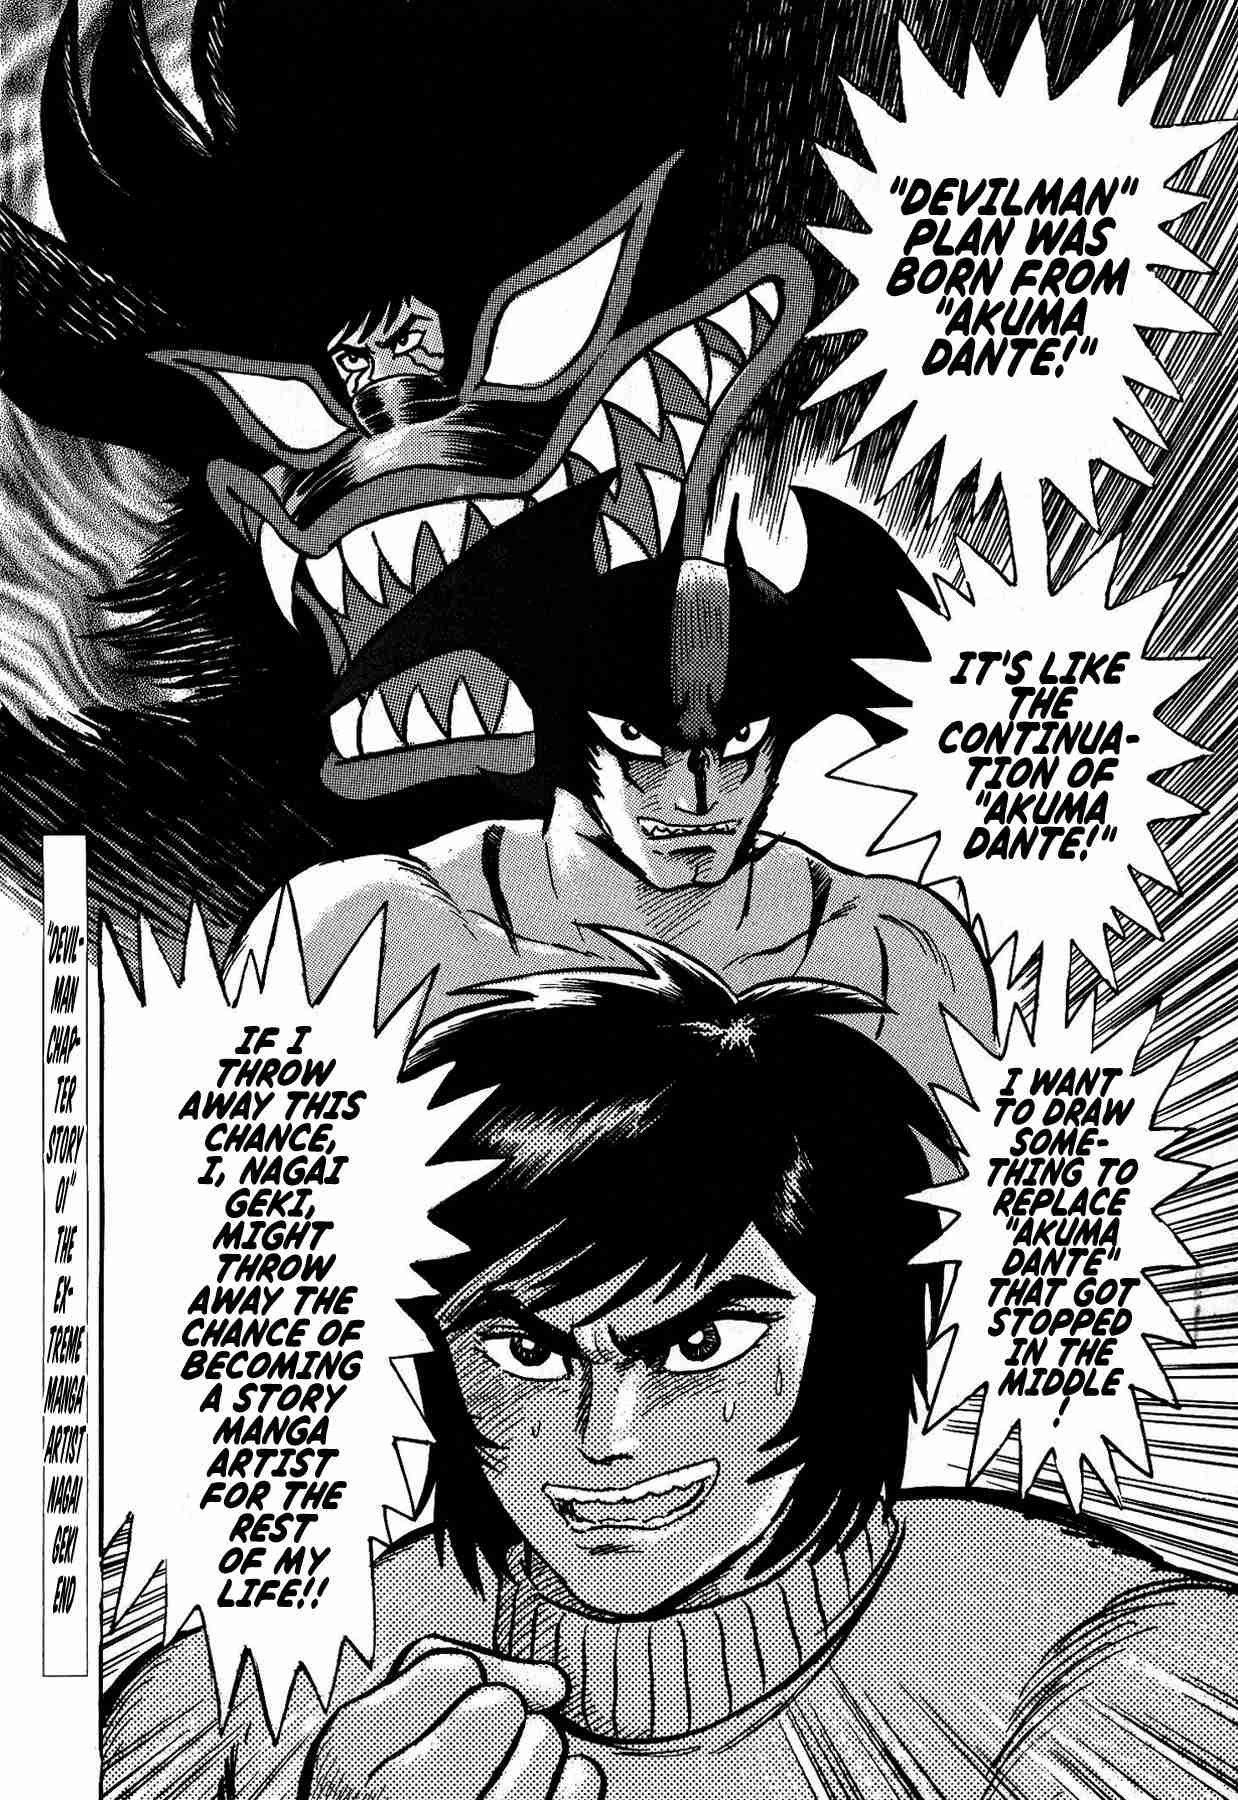 Gekiman! Devilman Chapter Vol. 1 Ch. 1 The Extreme Manga Artist Nagai Geki